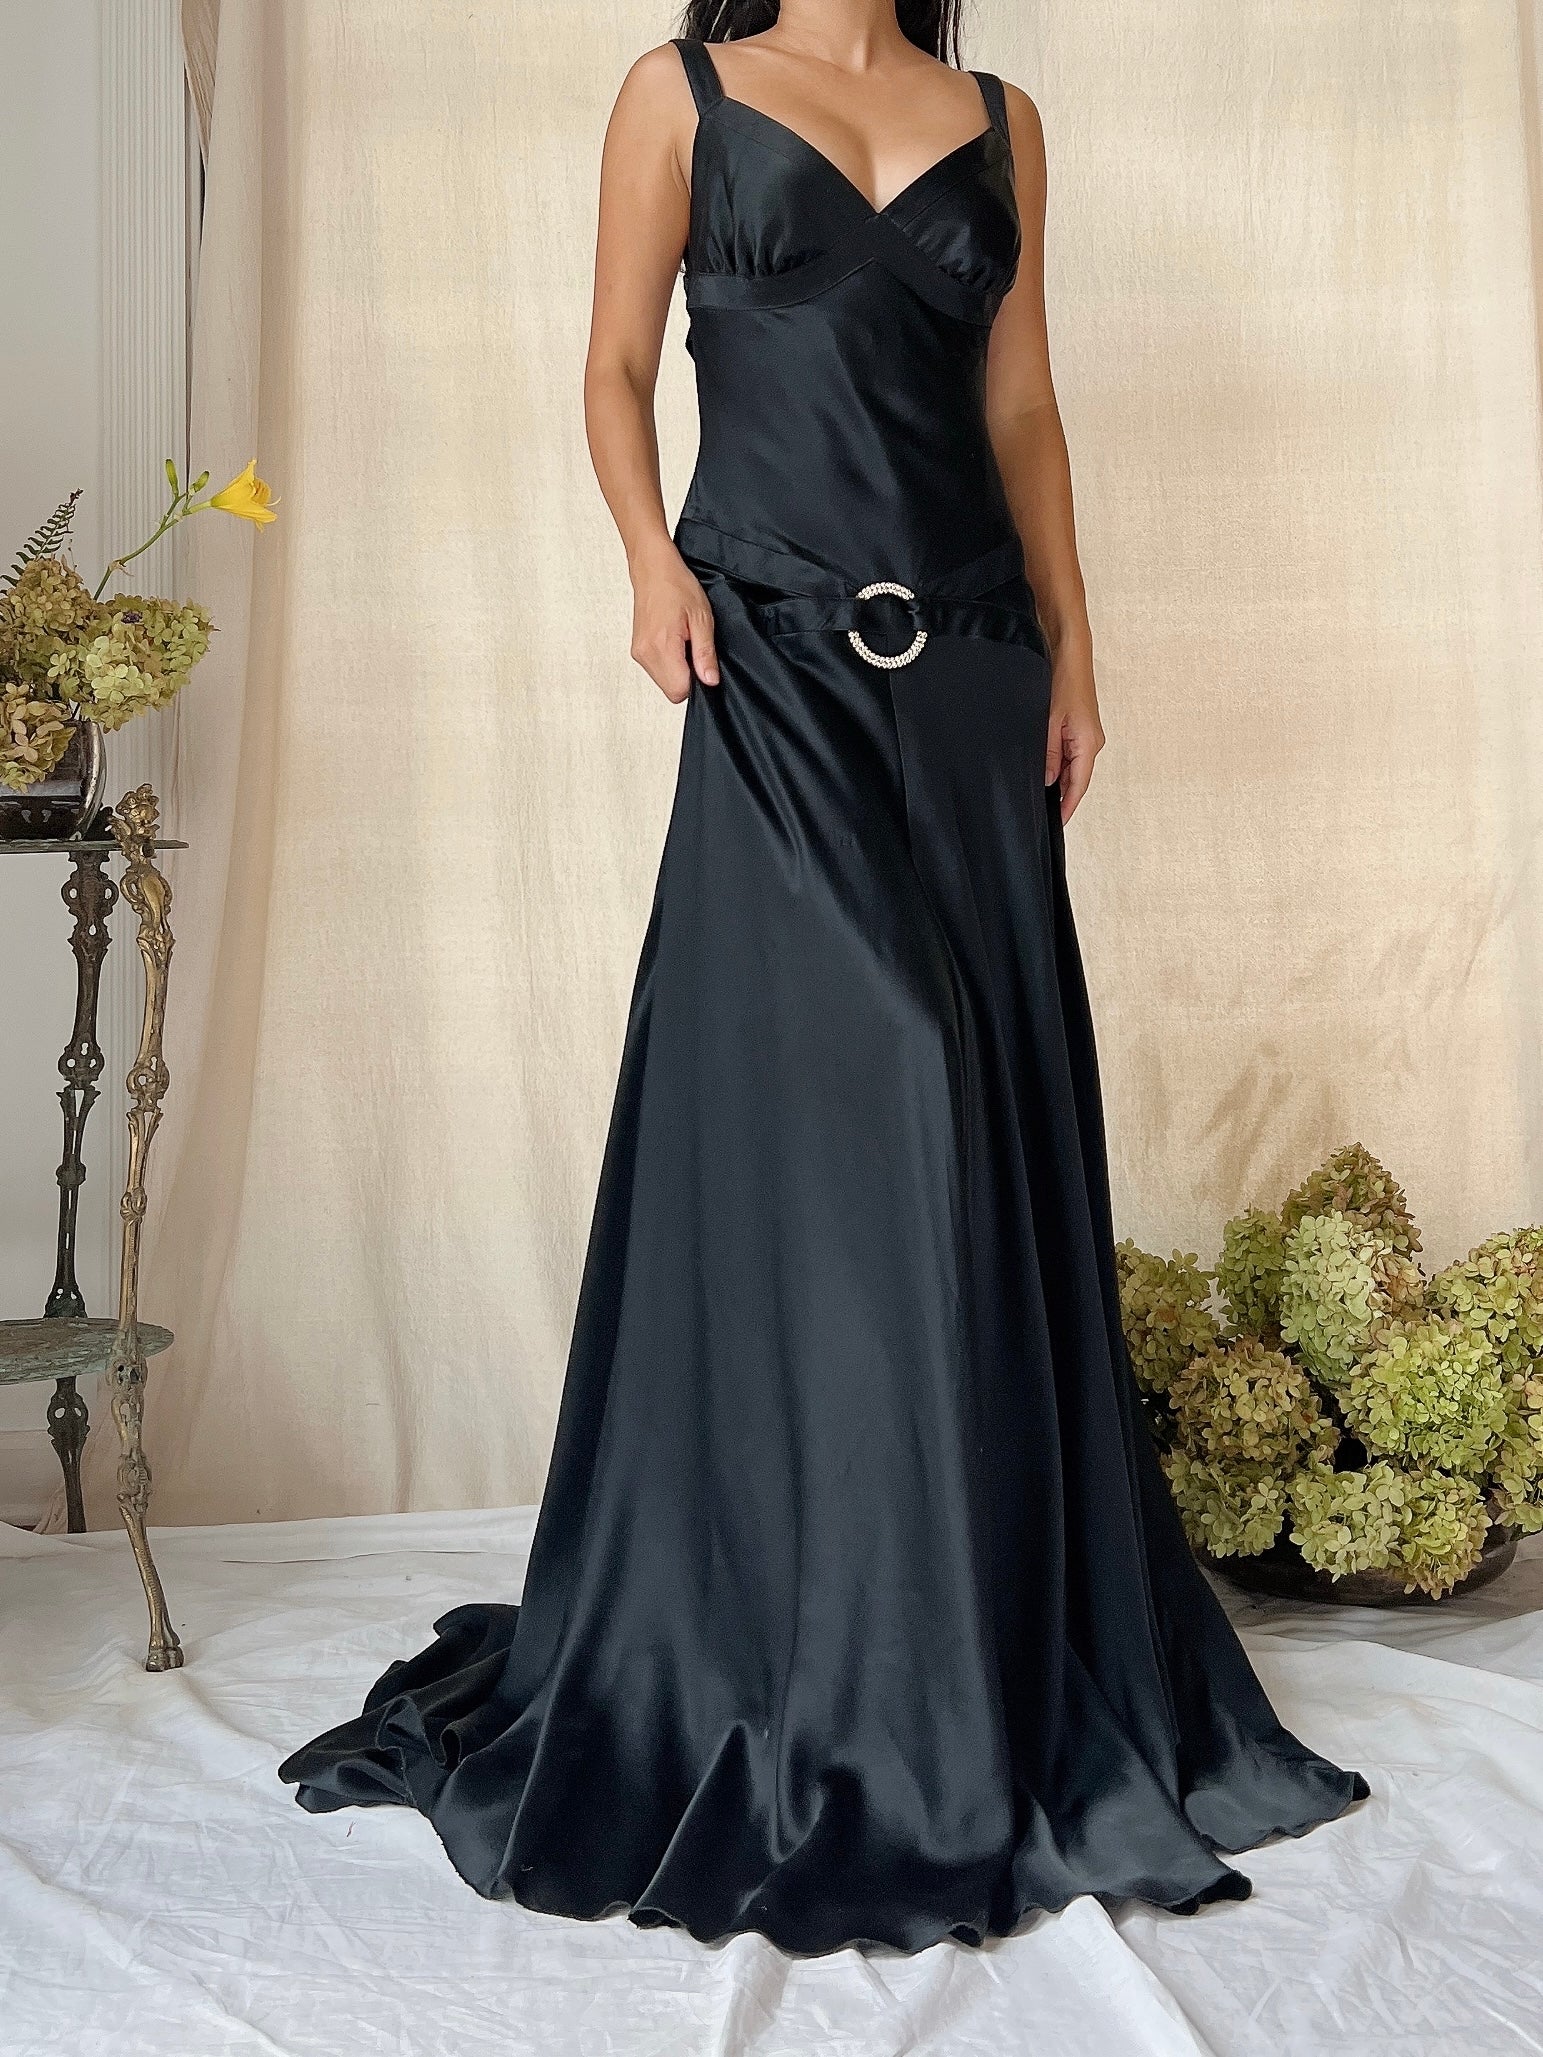 Vintage Black Silk Bias Cut Gown - S/M